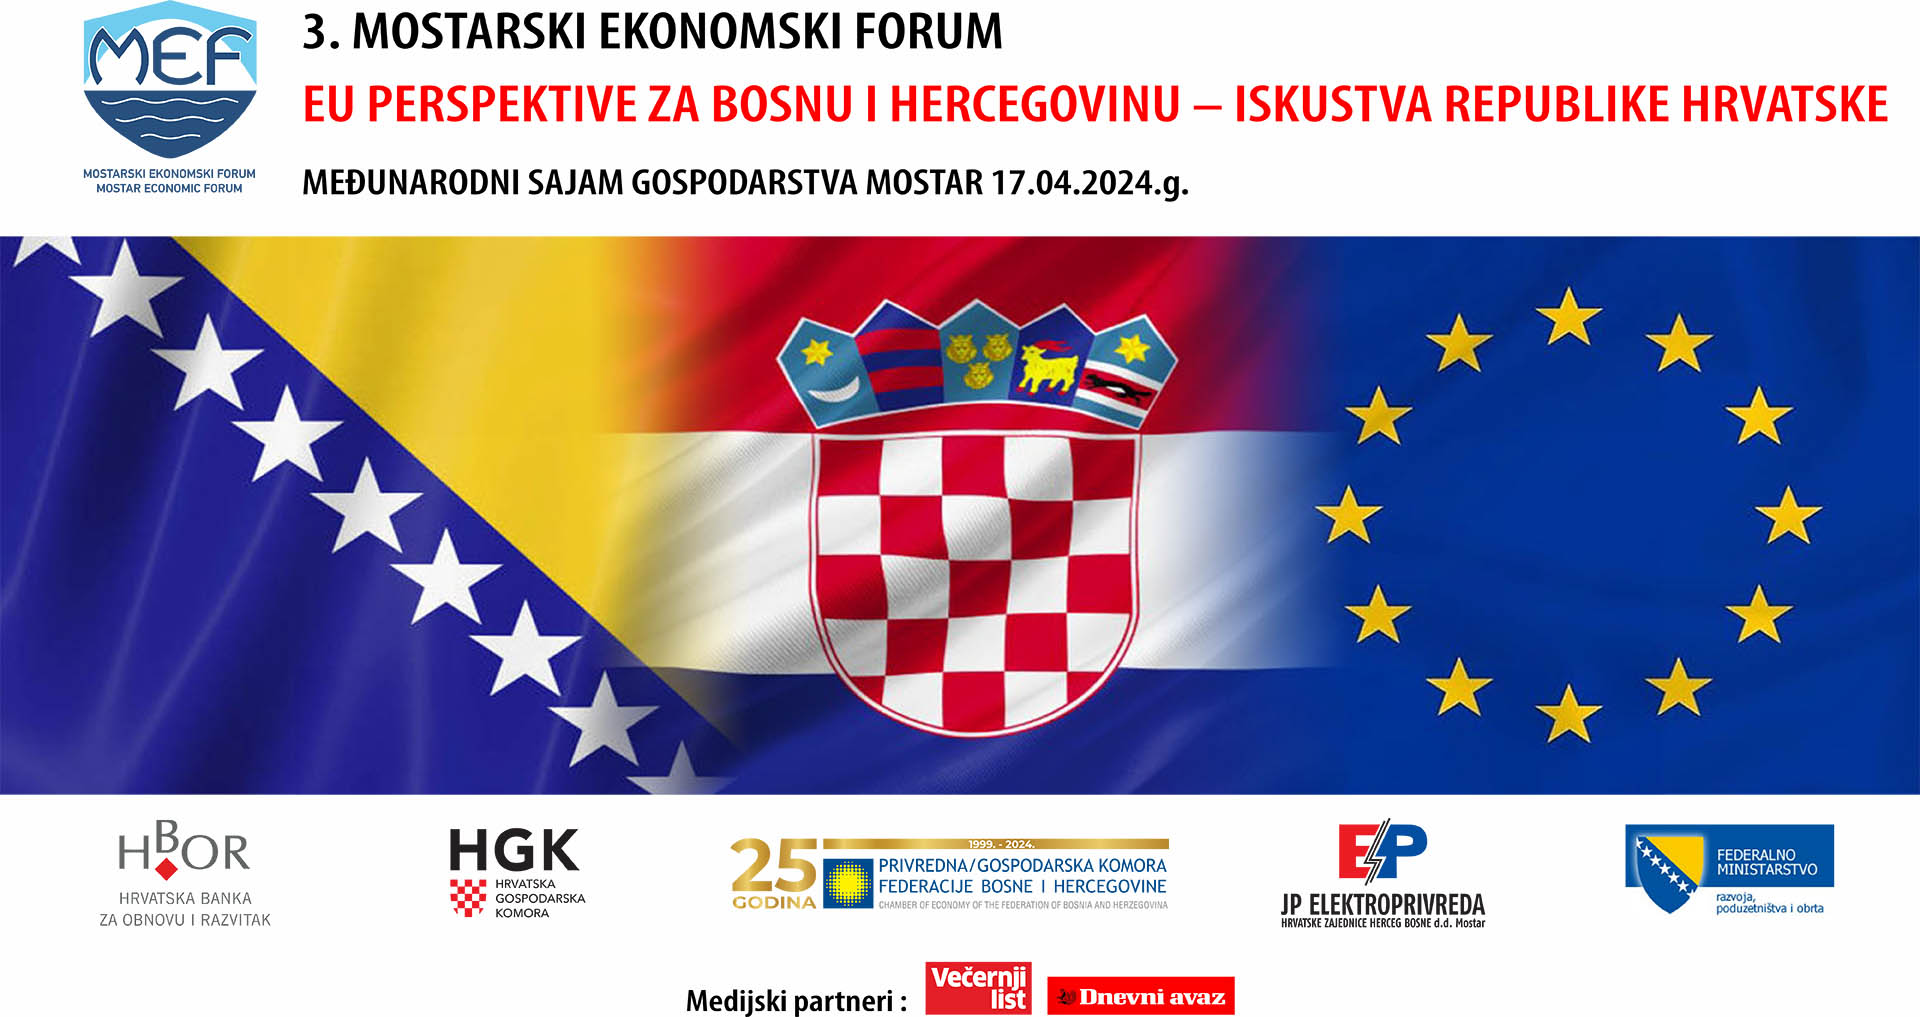 3. Mostarski ekonomski forum